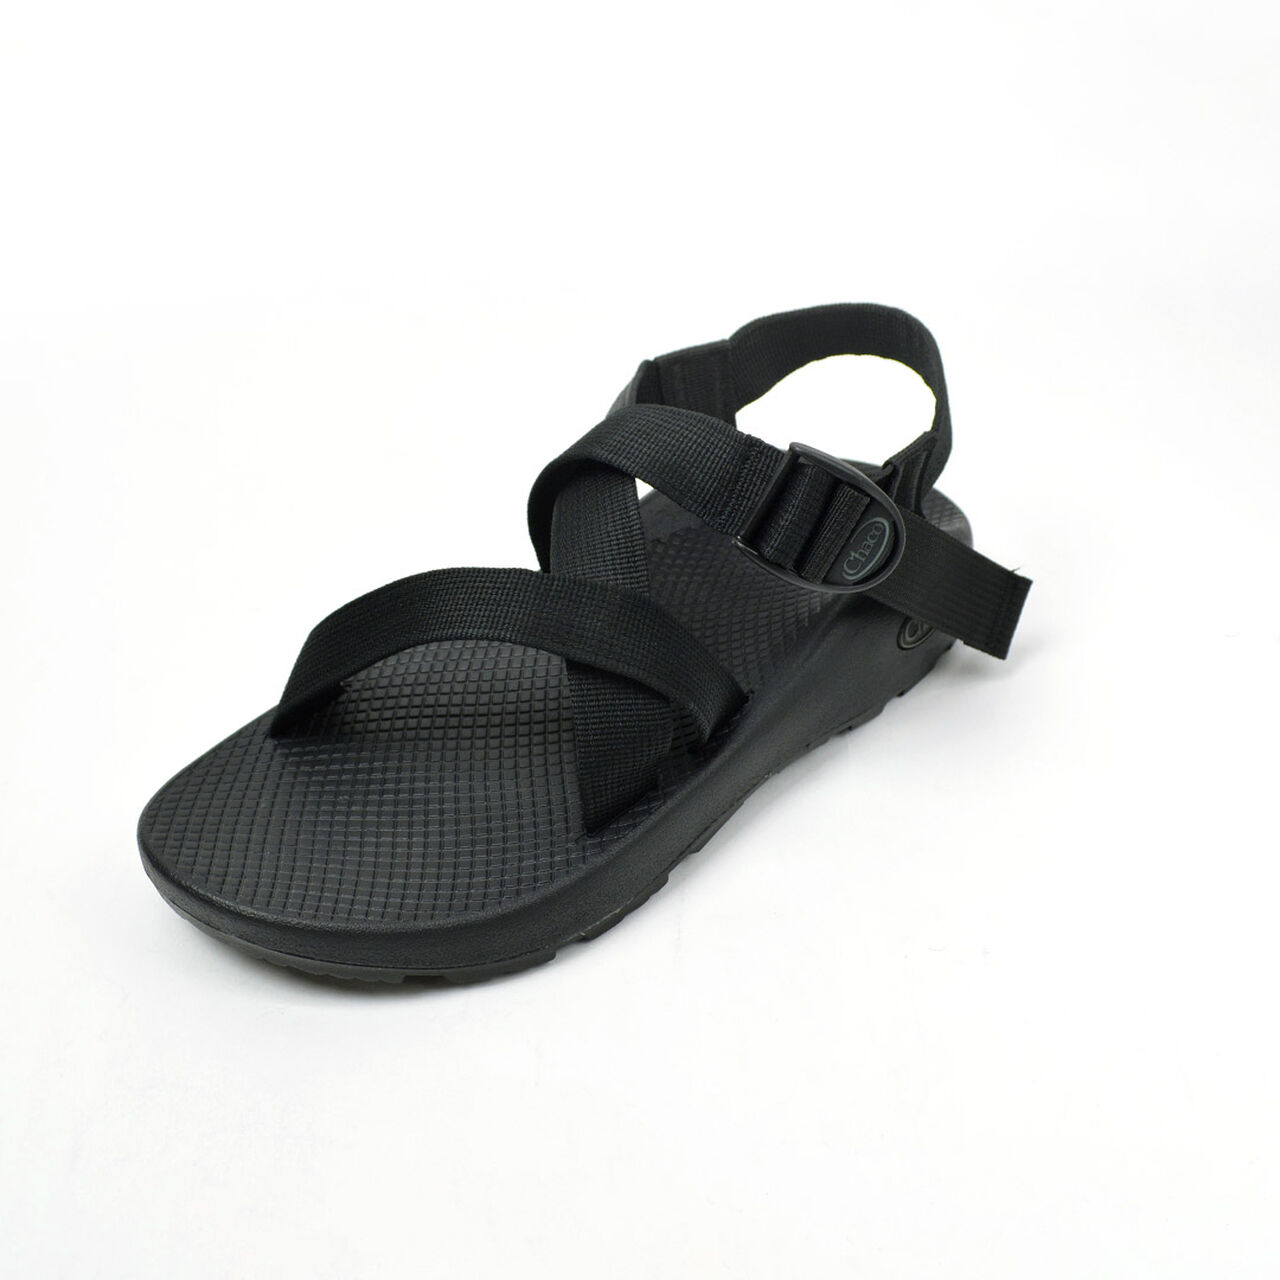 Z1 Sandals Classic,Black, large image number 0